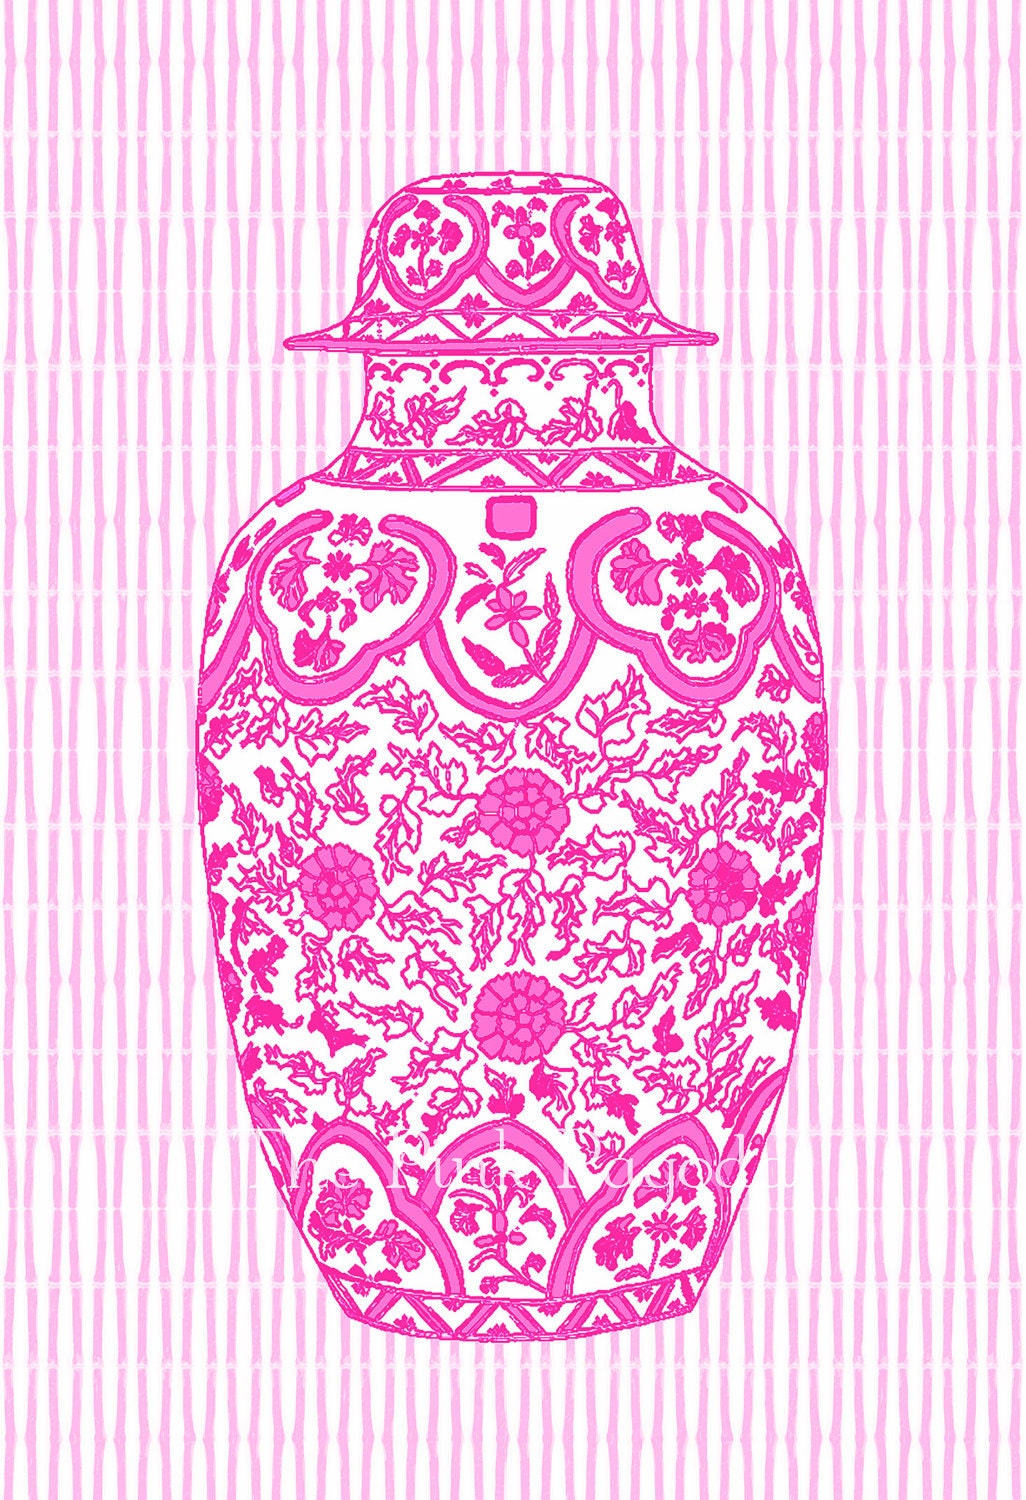 Hot Pink Ming Chinoiserie Ginger Jar on Bamboo Stripe 11x14 Giclee - thepinkpagoda